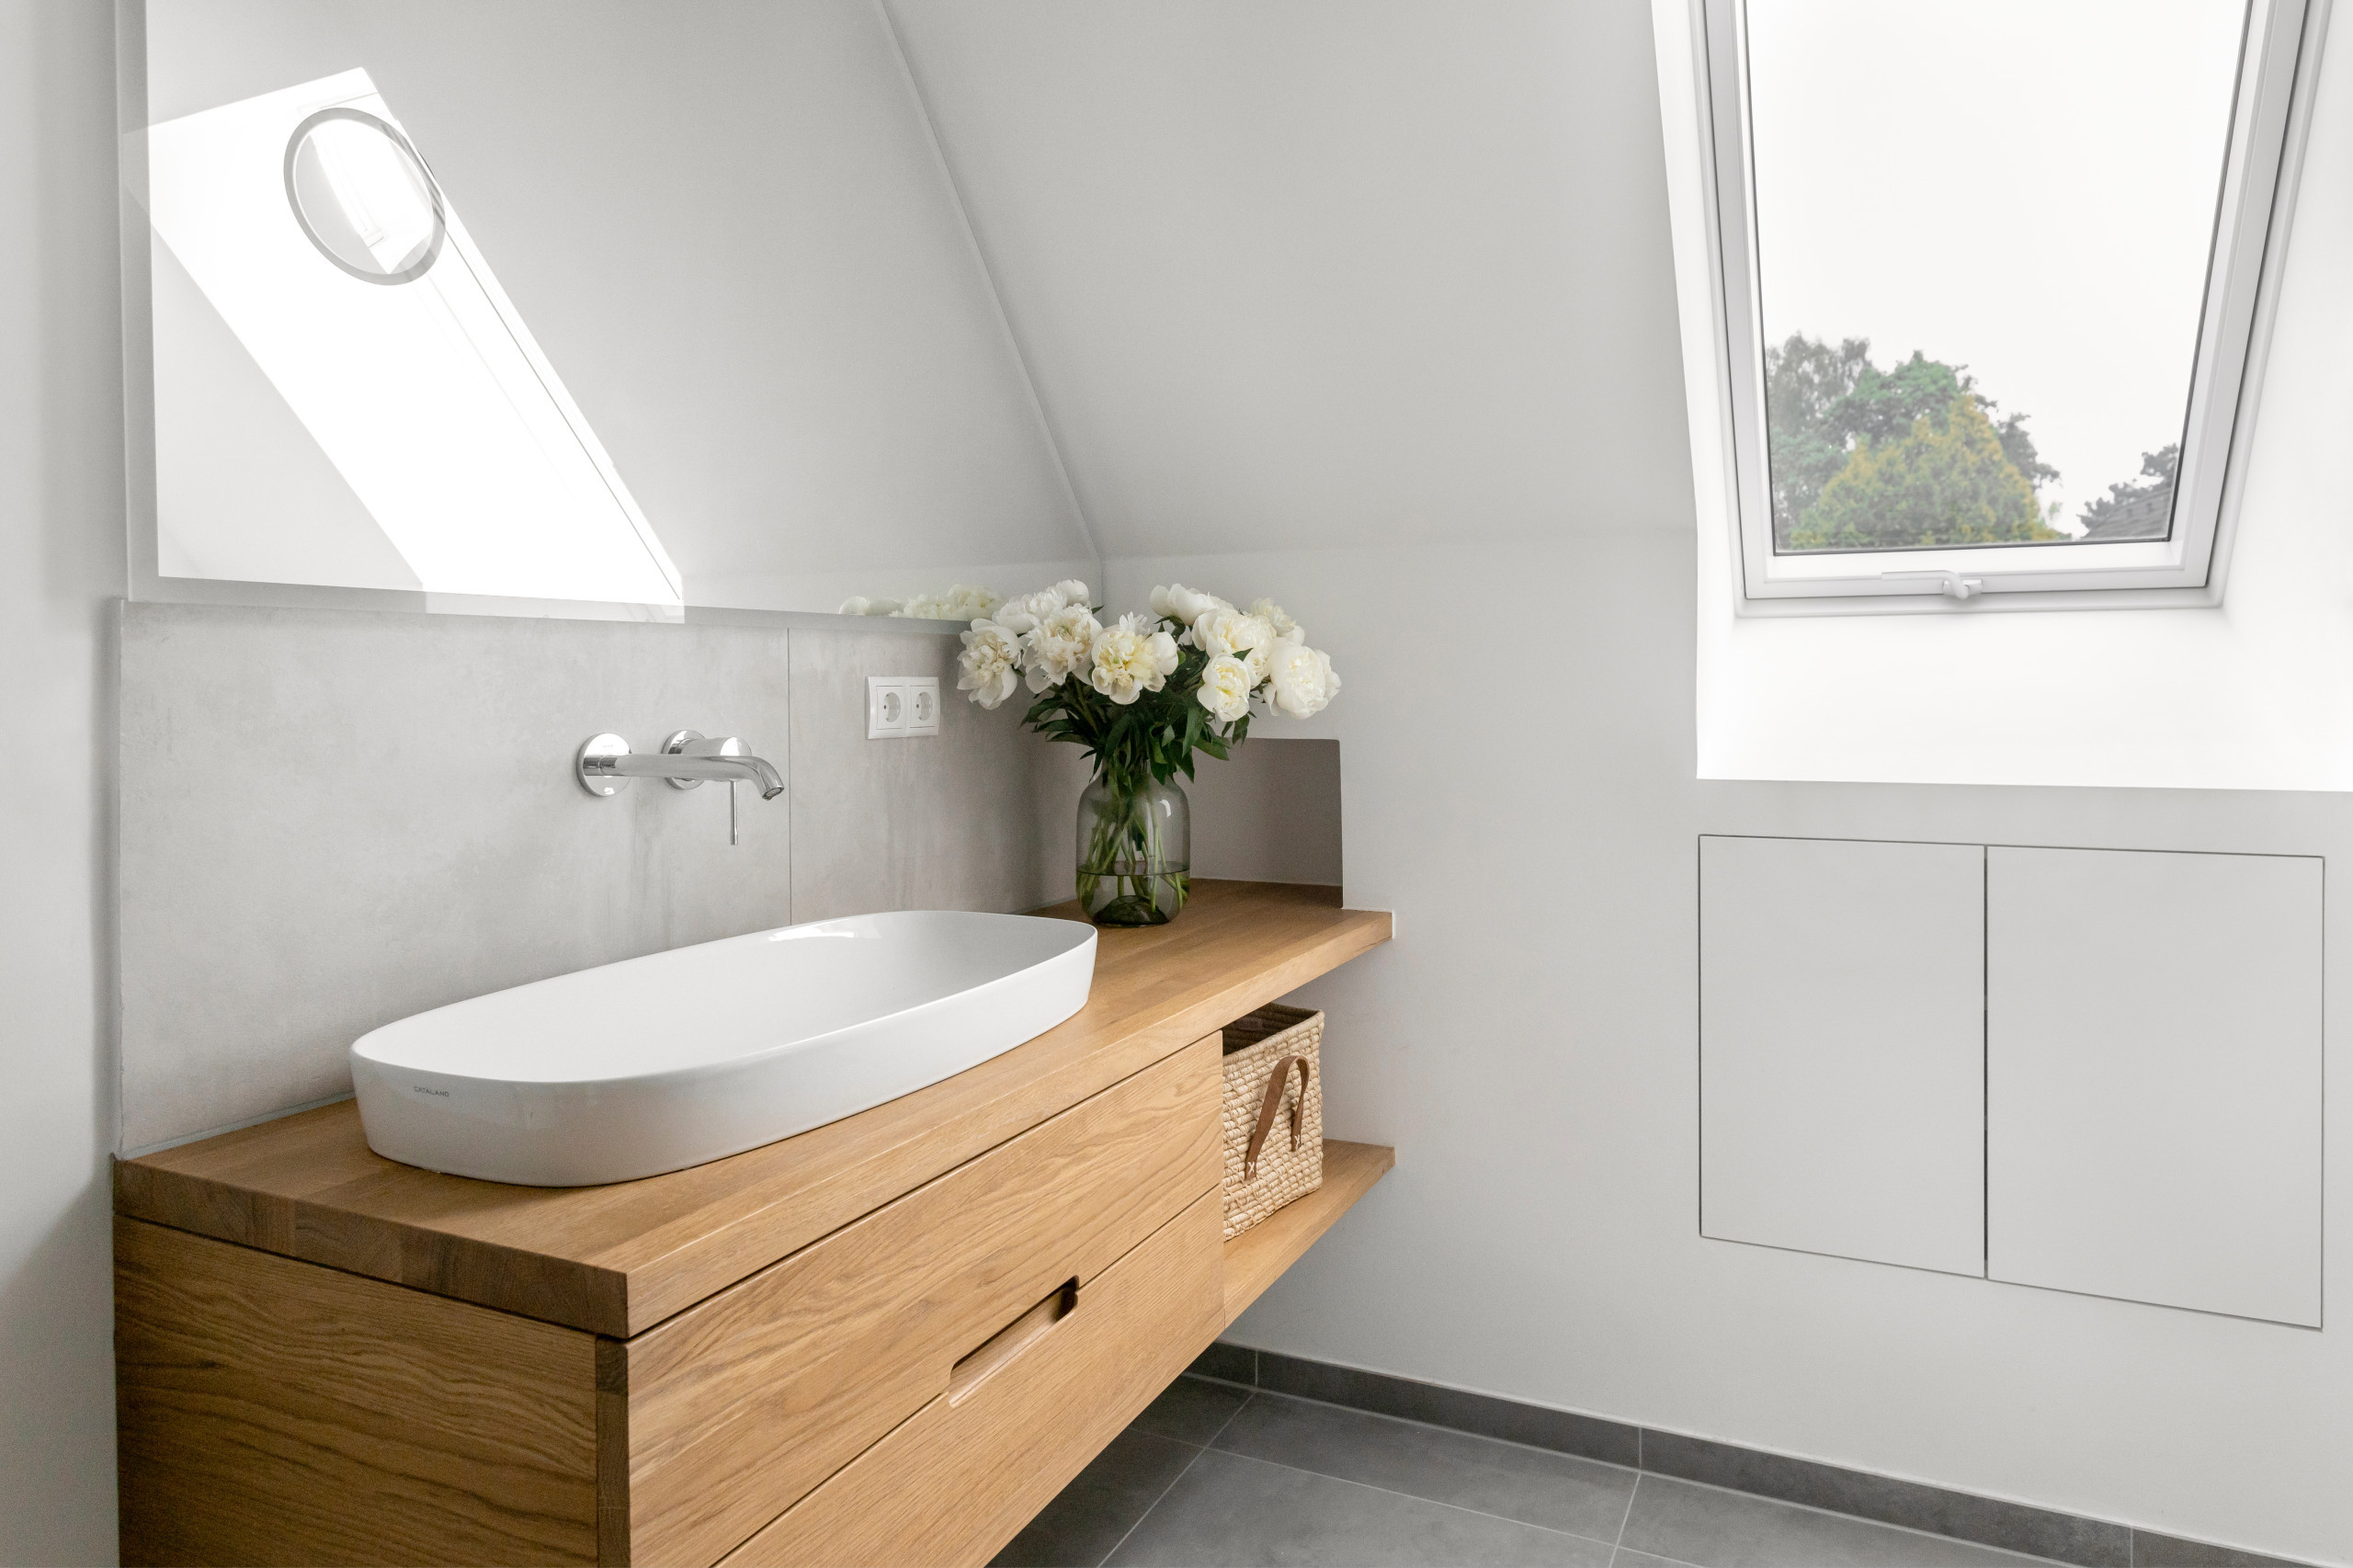 75 Moderne Badezimmer Ideen &amp; Bilder | Houzz for Bilder Für Badezimmer Ideen